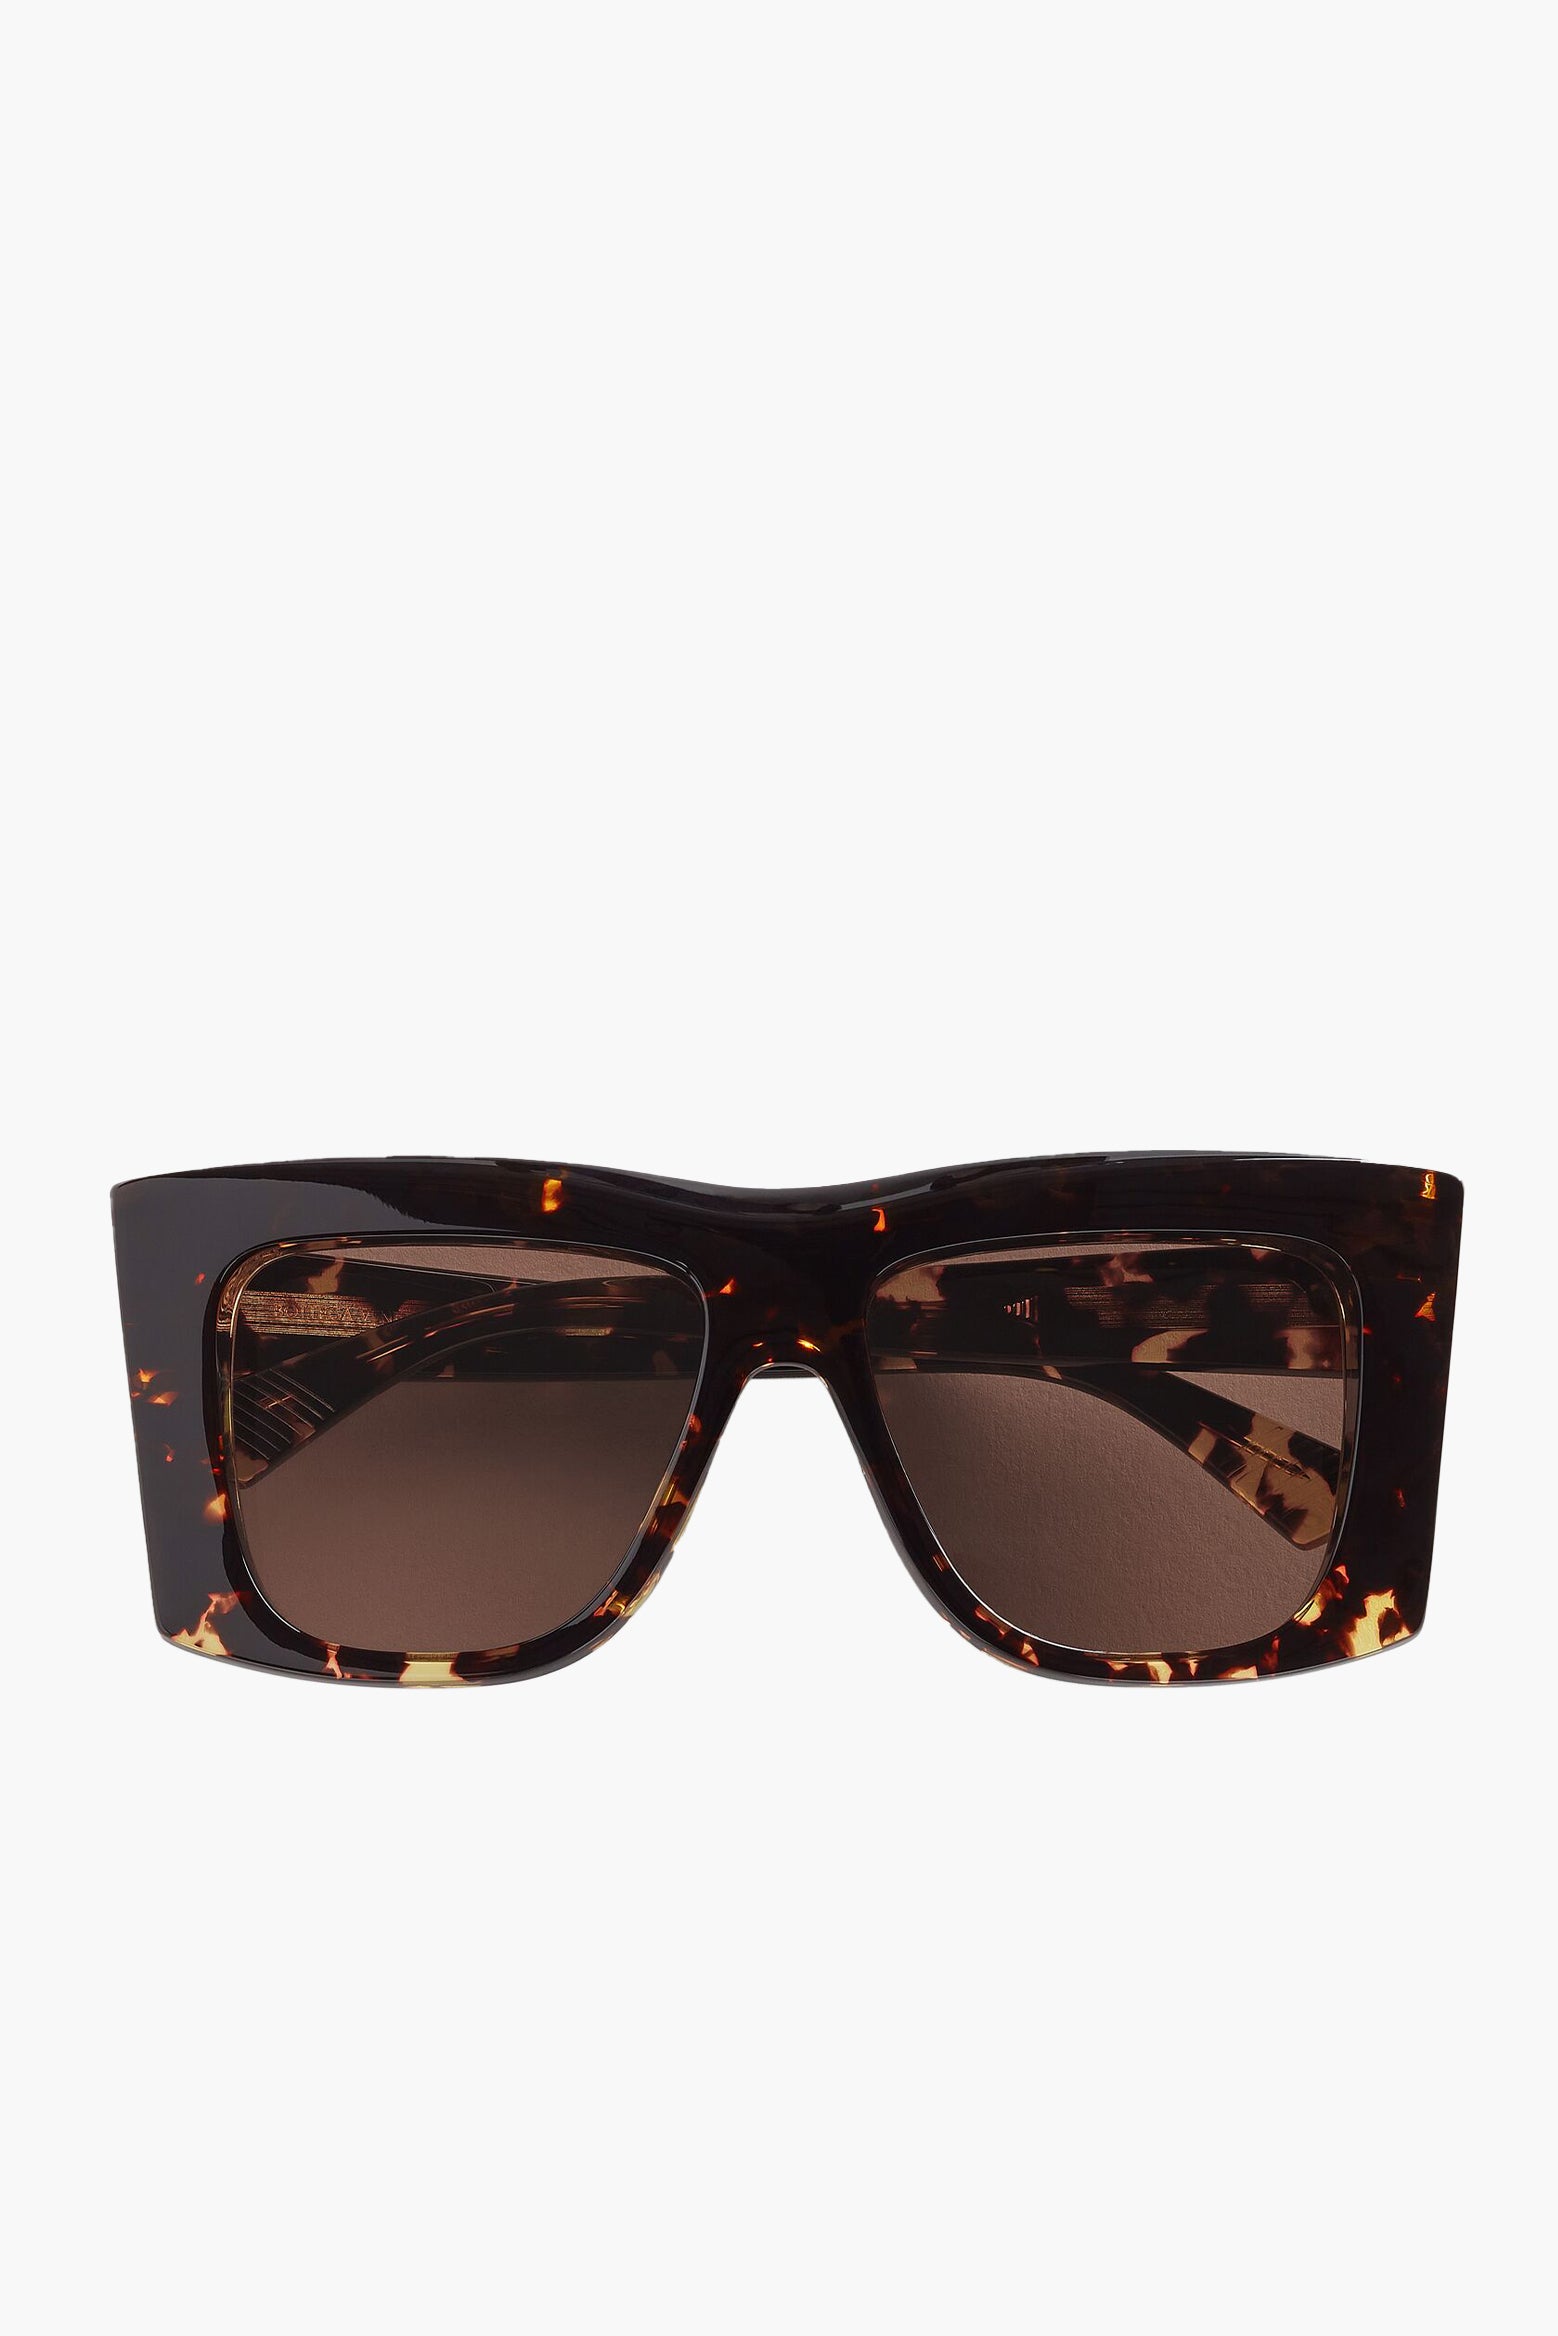 Bottega Veneta Visor Recycled Sunglasses in Havana available at The New Trend Australia.